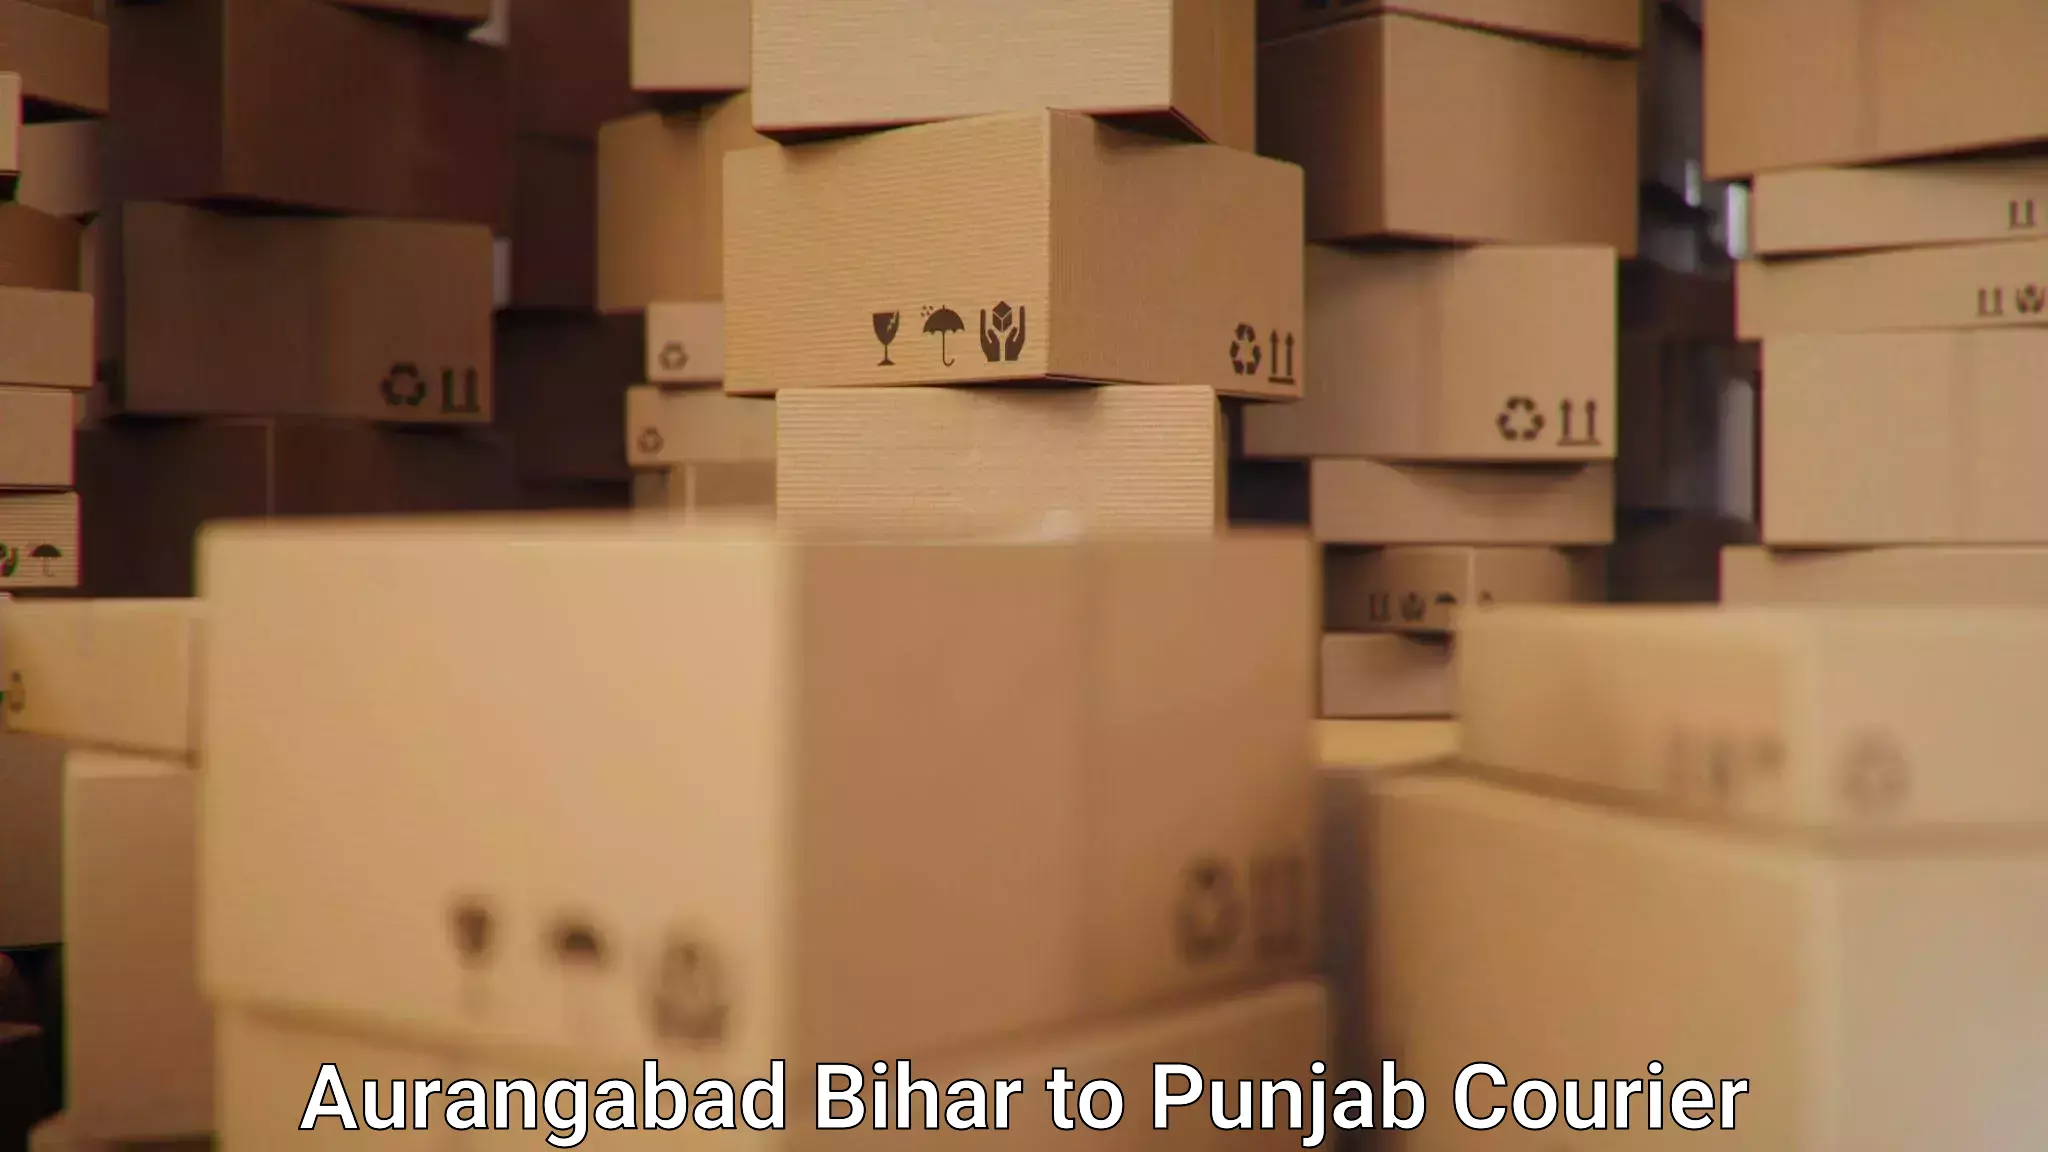 Custom courier packaging Aurangabad Bihar to Batala